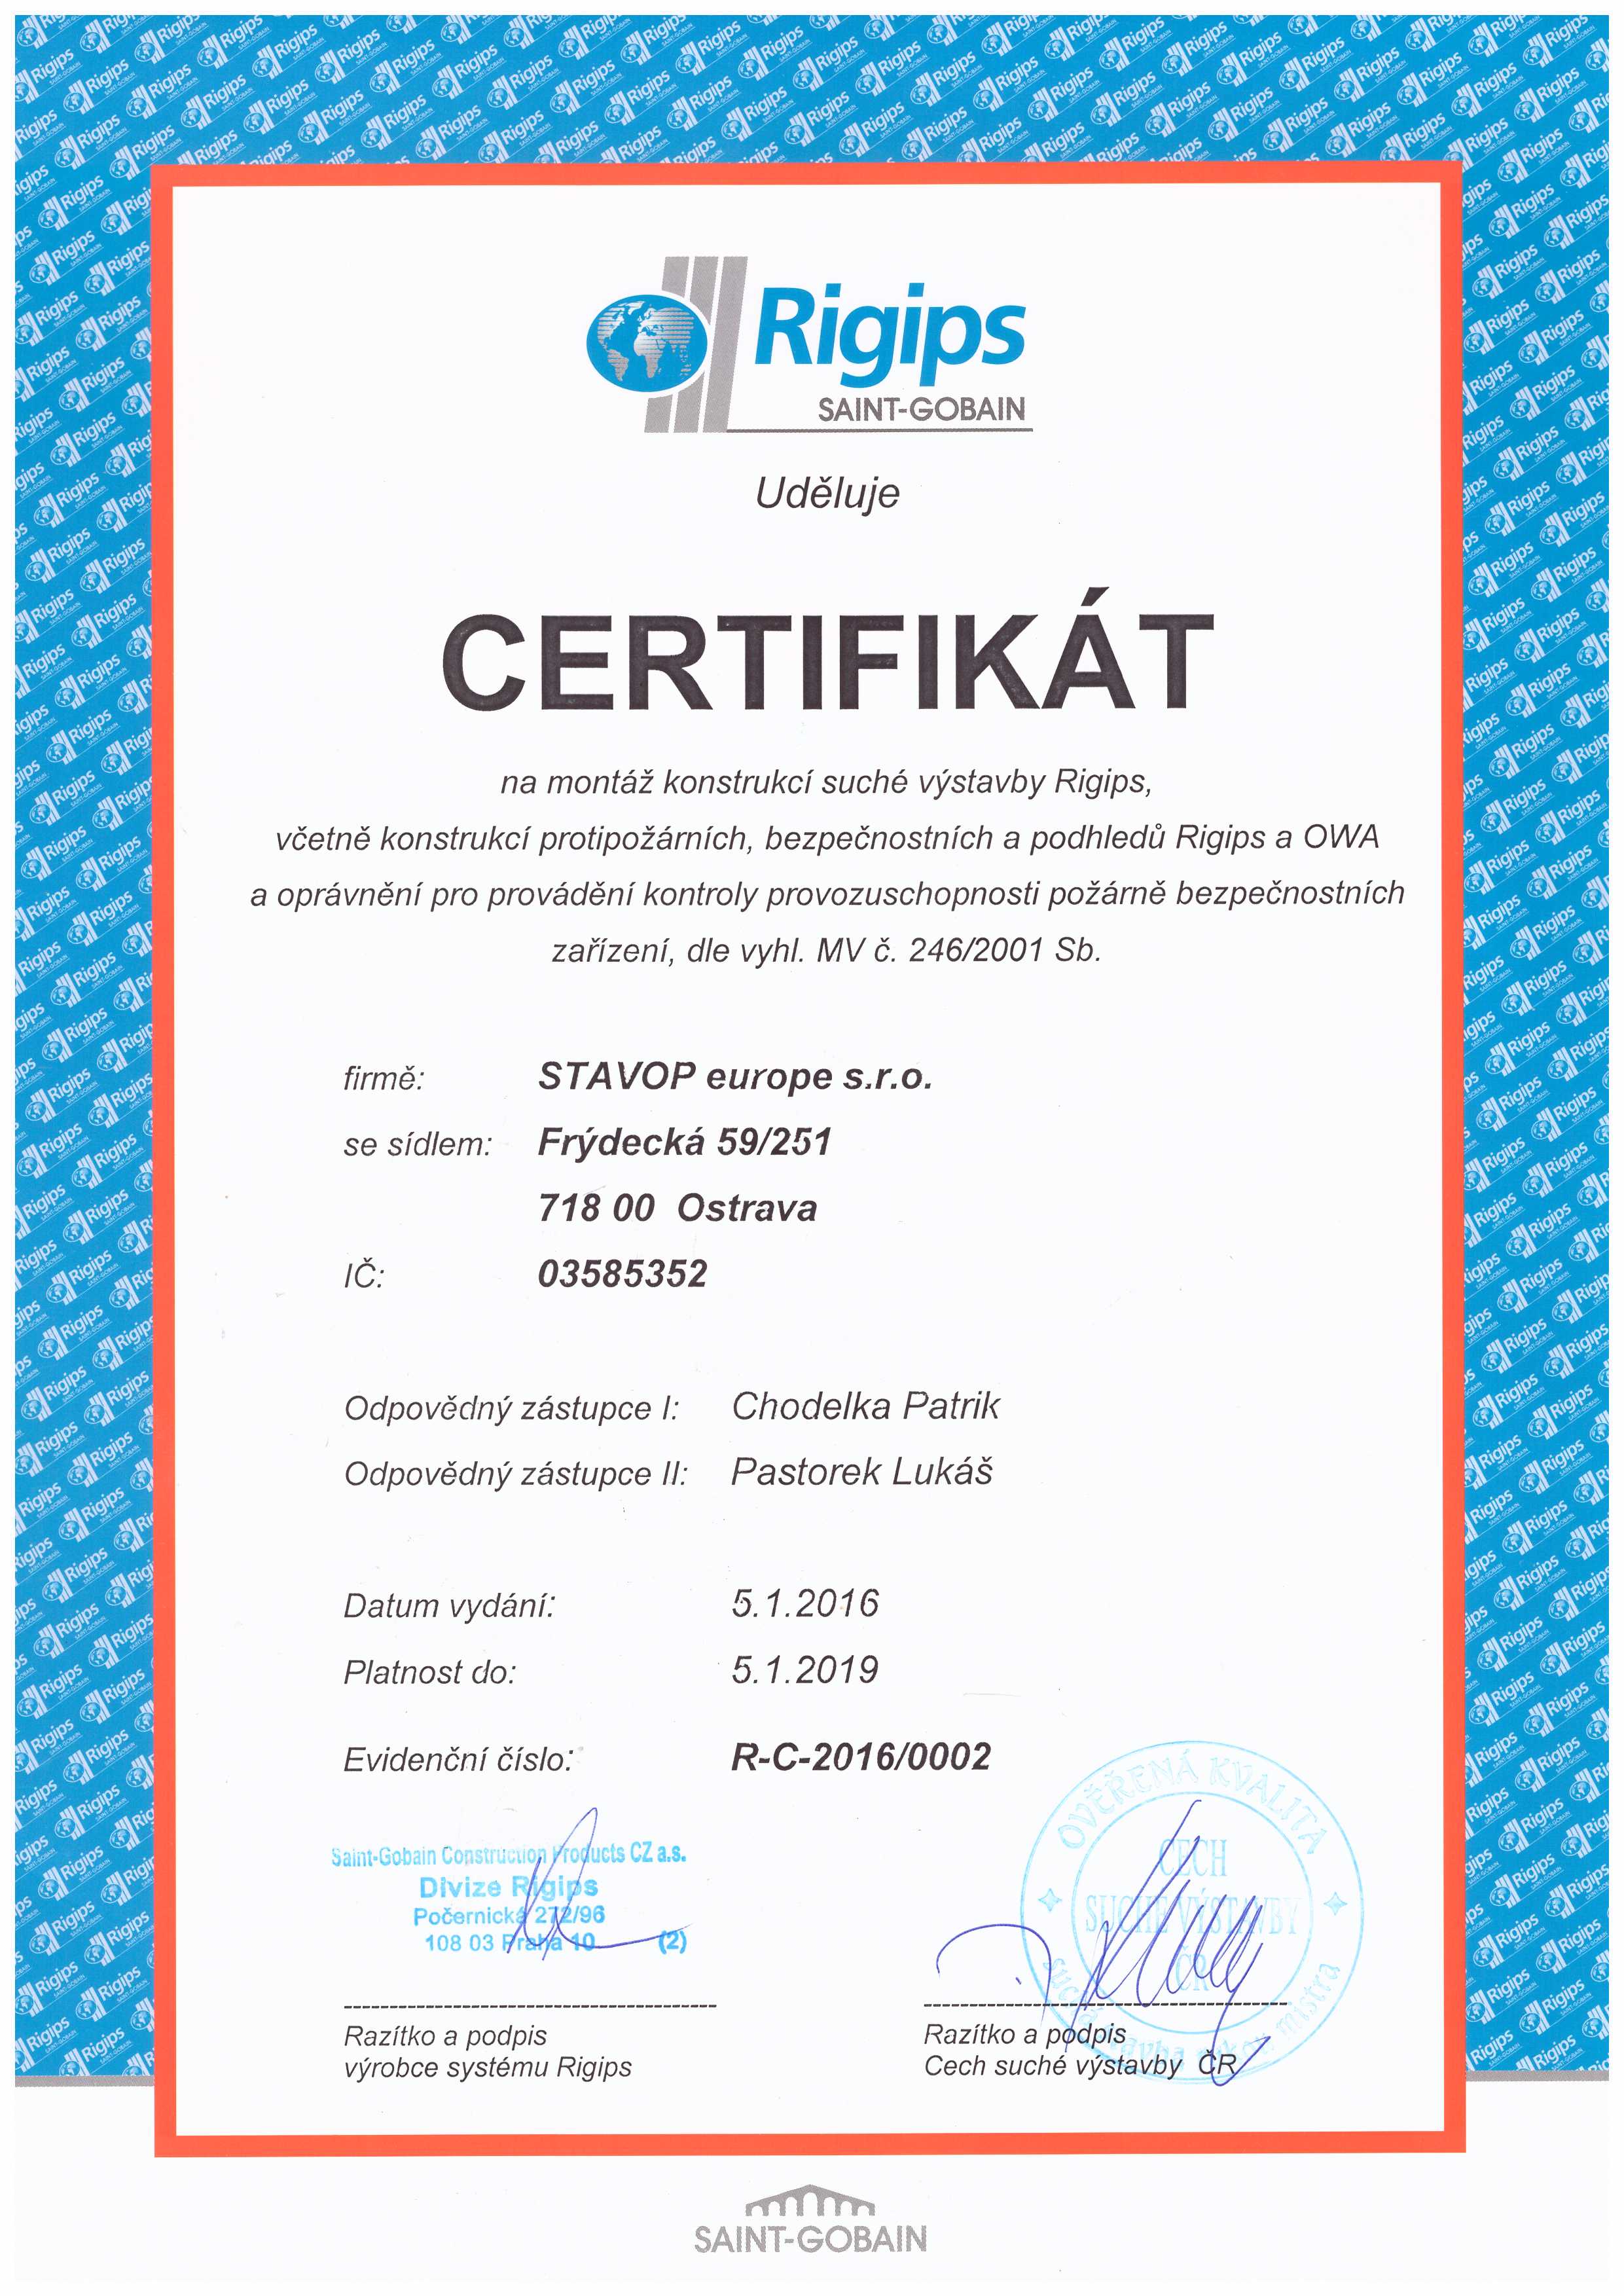 Certifikat-rigips-sk